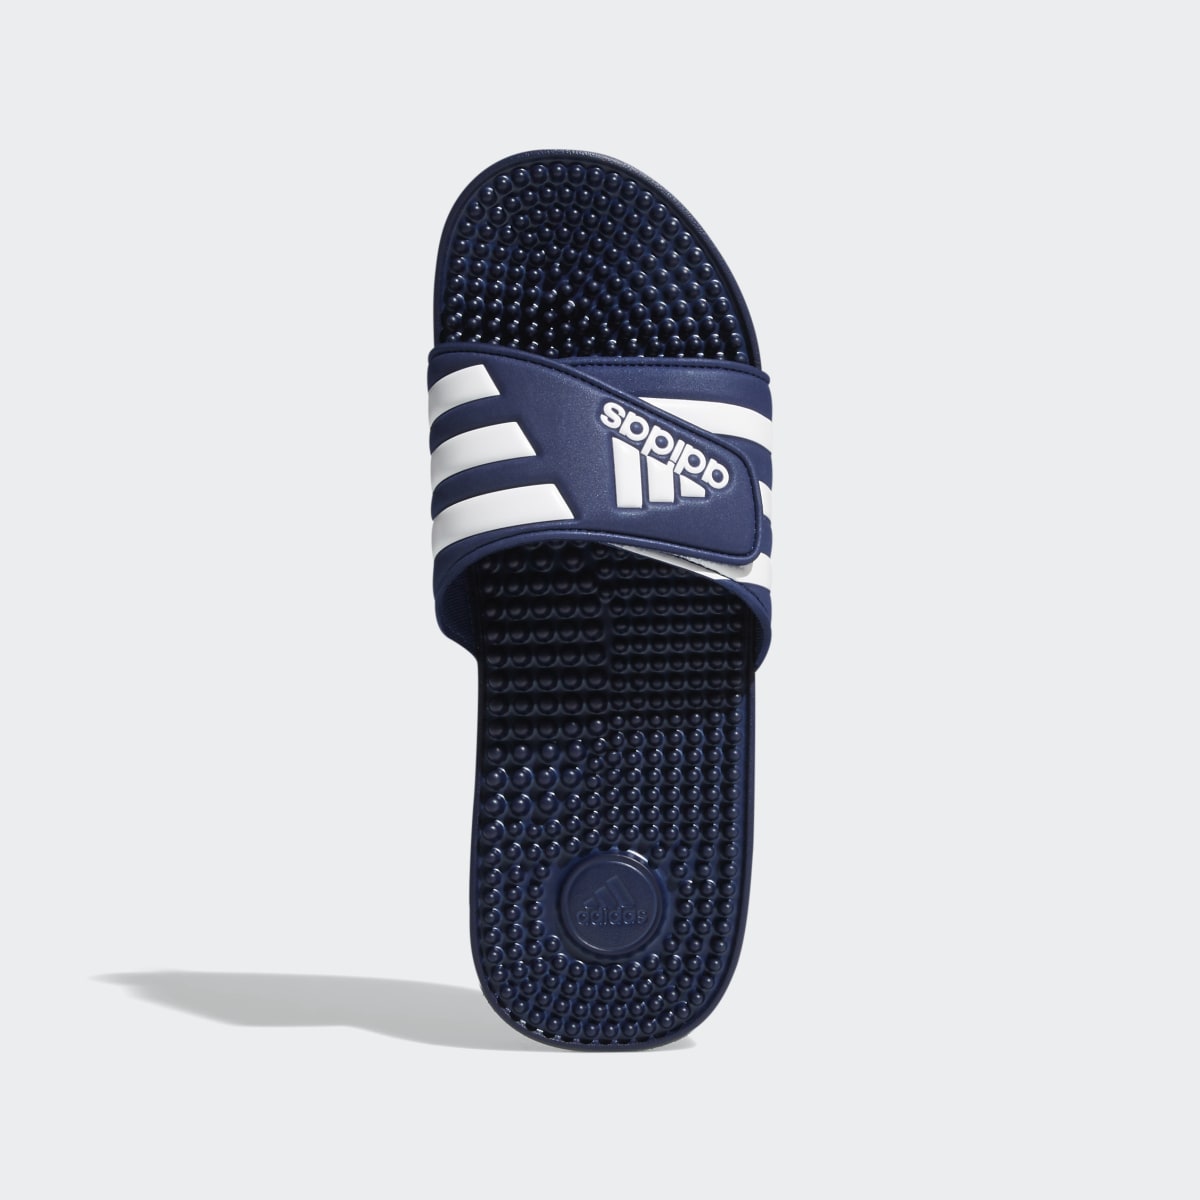 Adidas Adissage Badeschlappen. 4